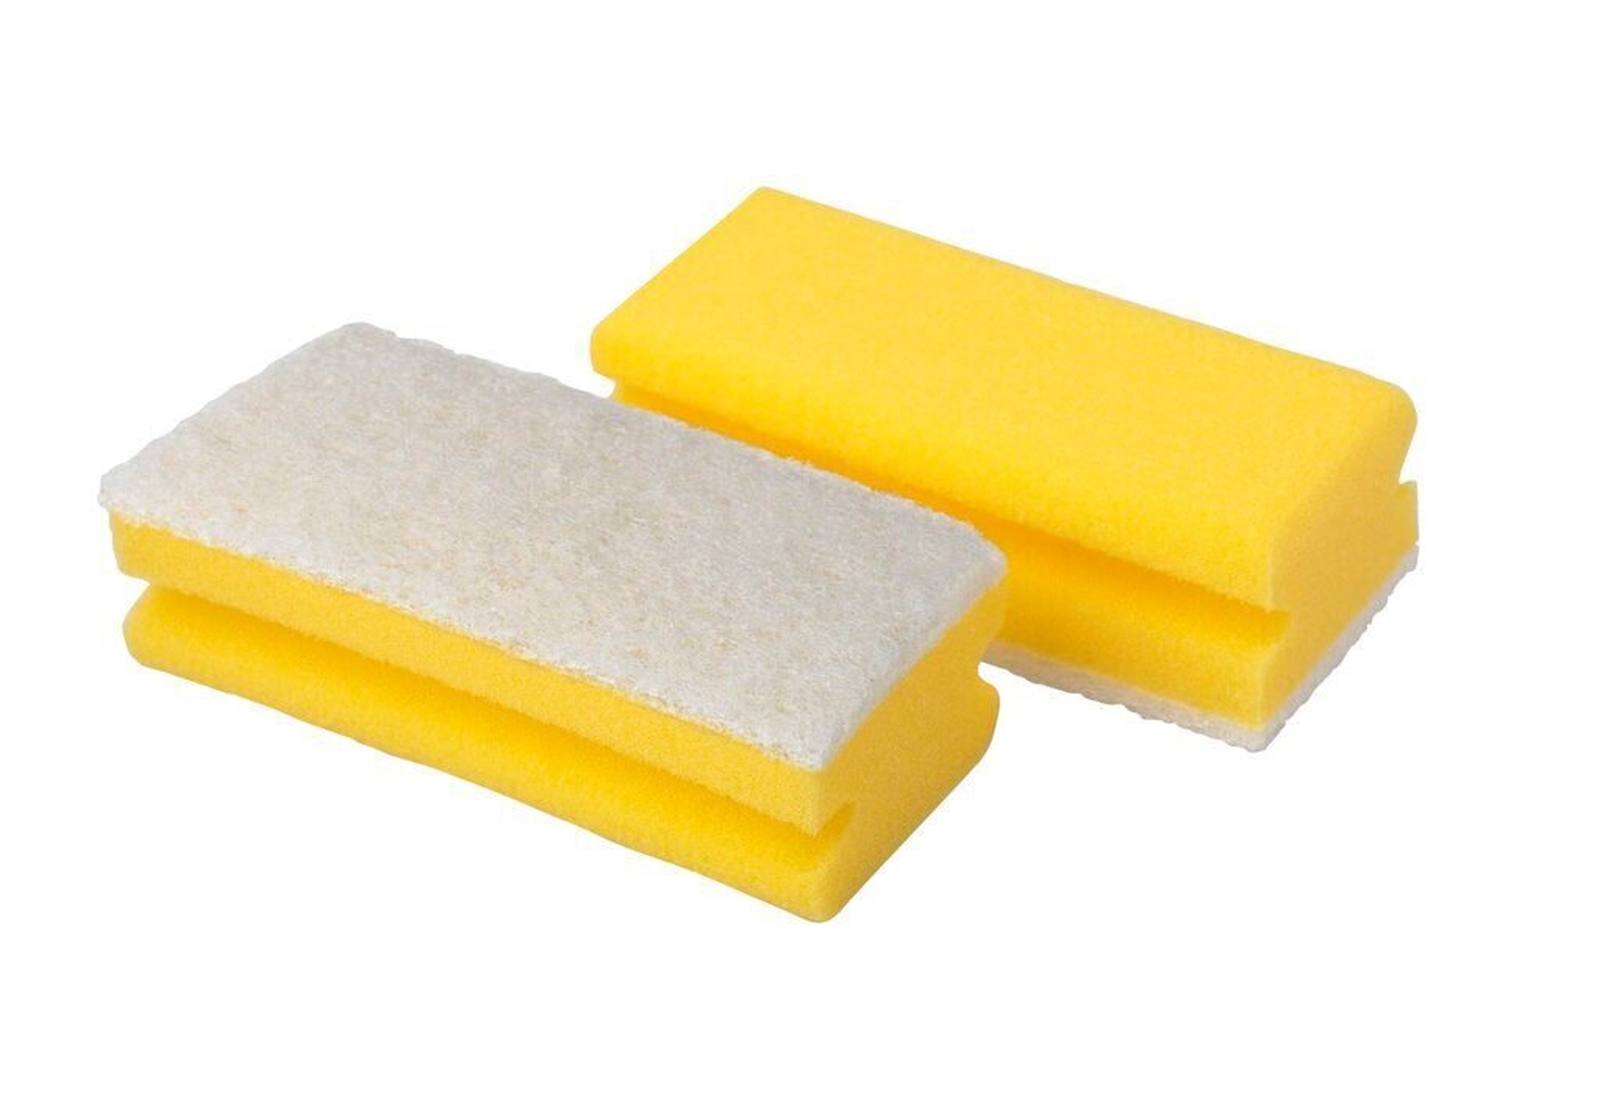 3M Scotch-Brite Sponge 107, yellow/white, 70 mm x 130 mm